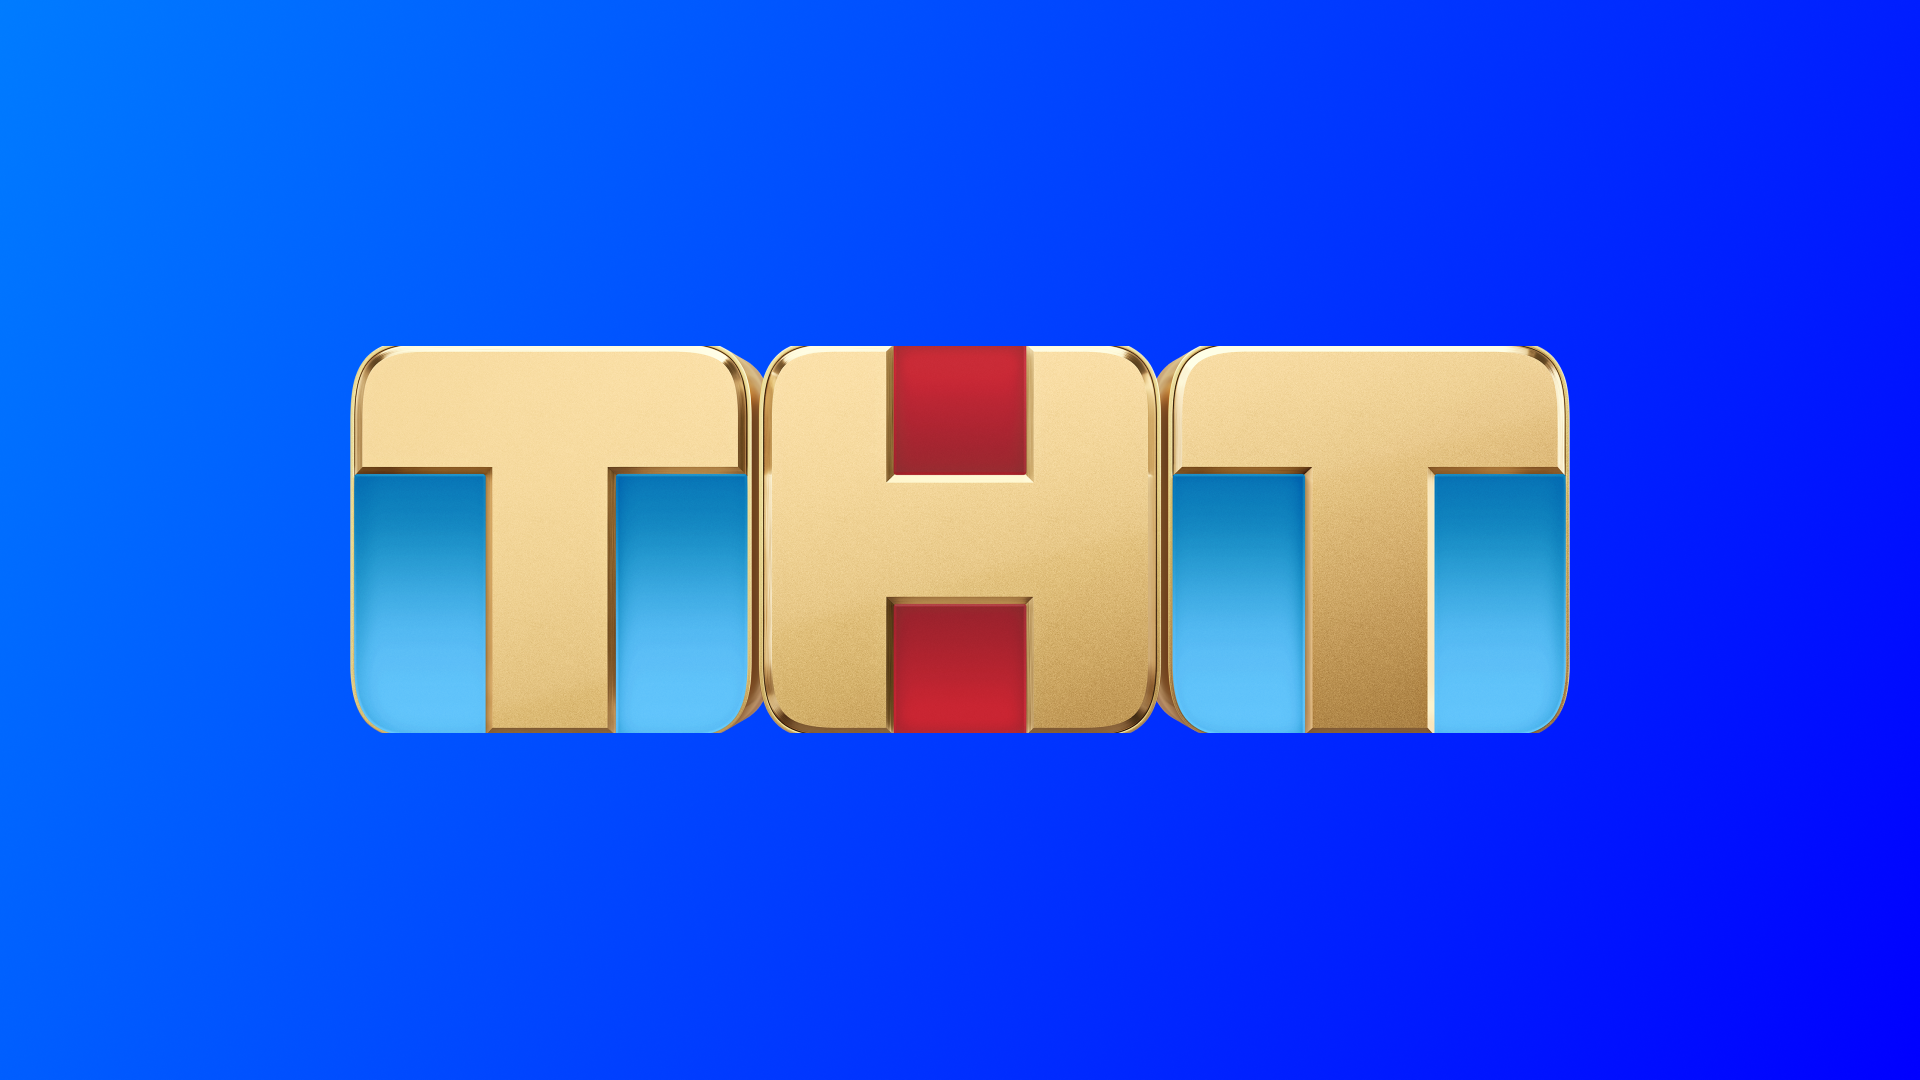 ТНТ. Телеканал ТНТ. Логотип канала ТНТ. Тет (Телеканал).